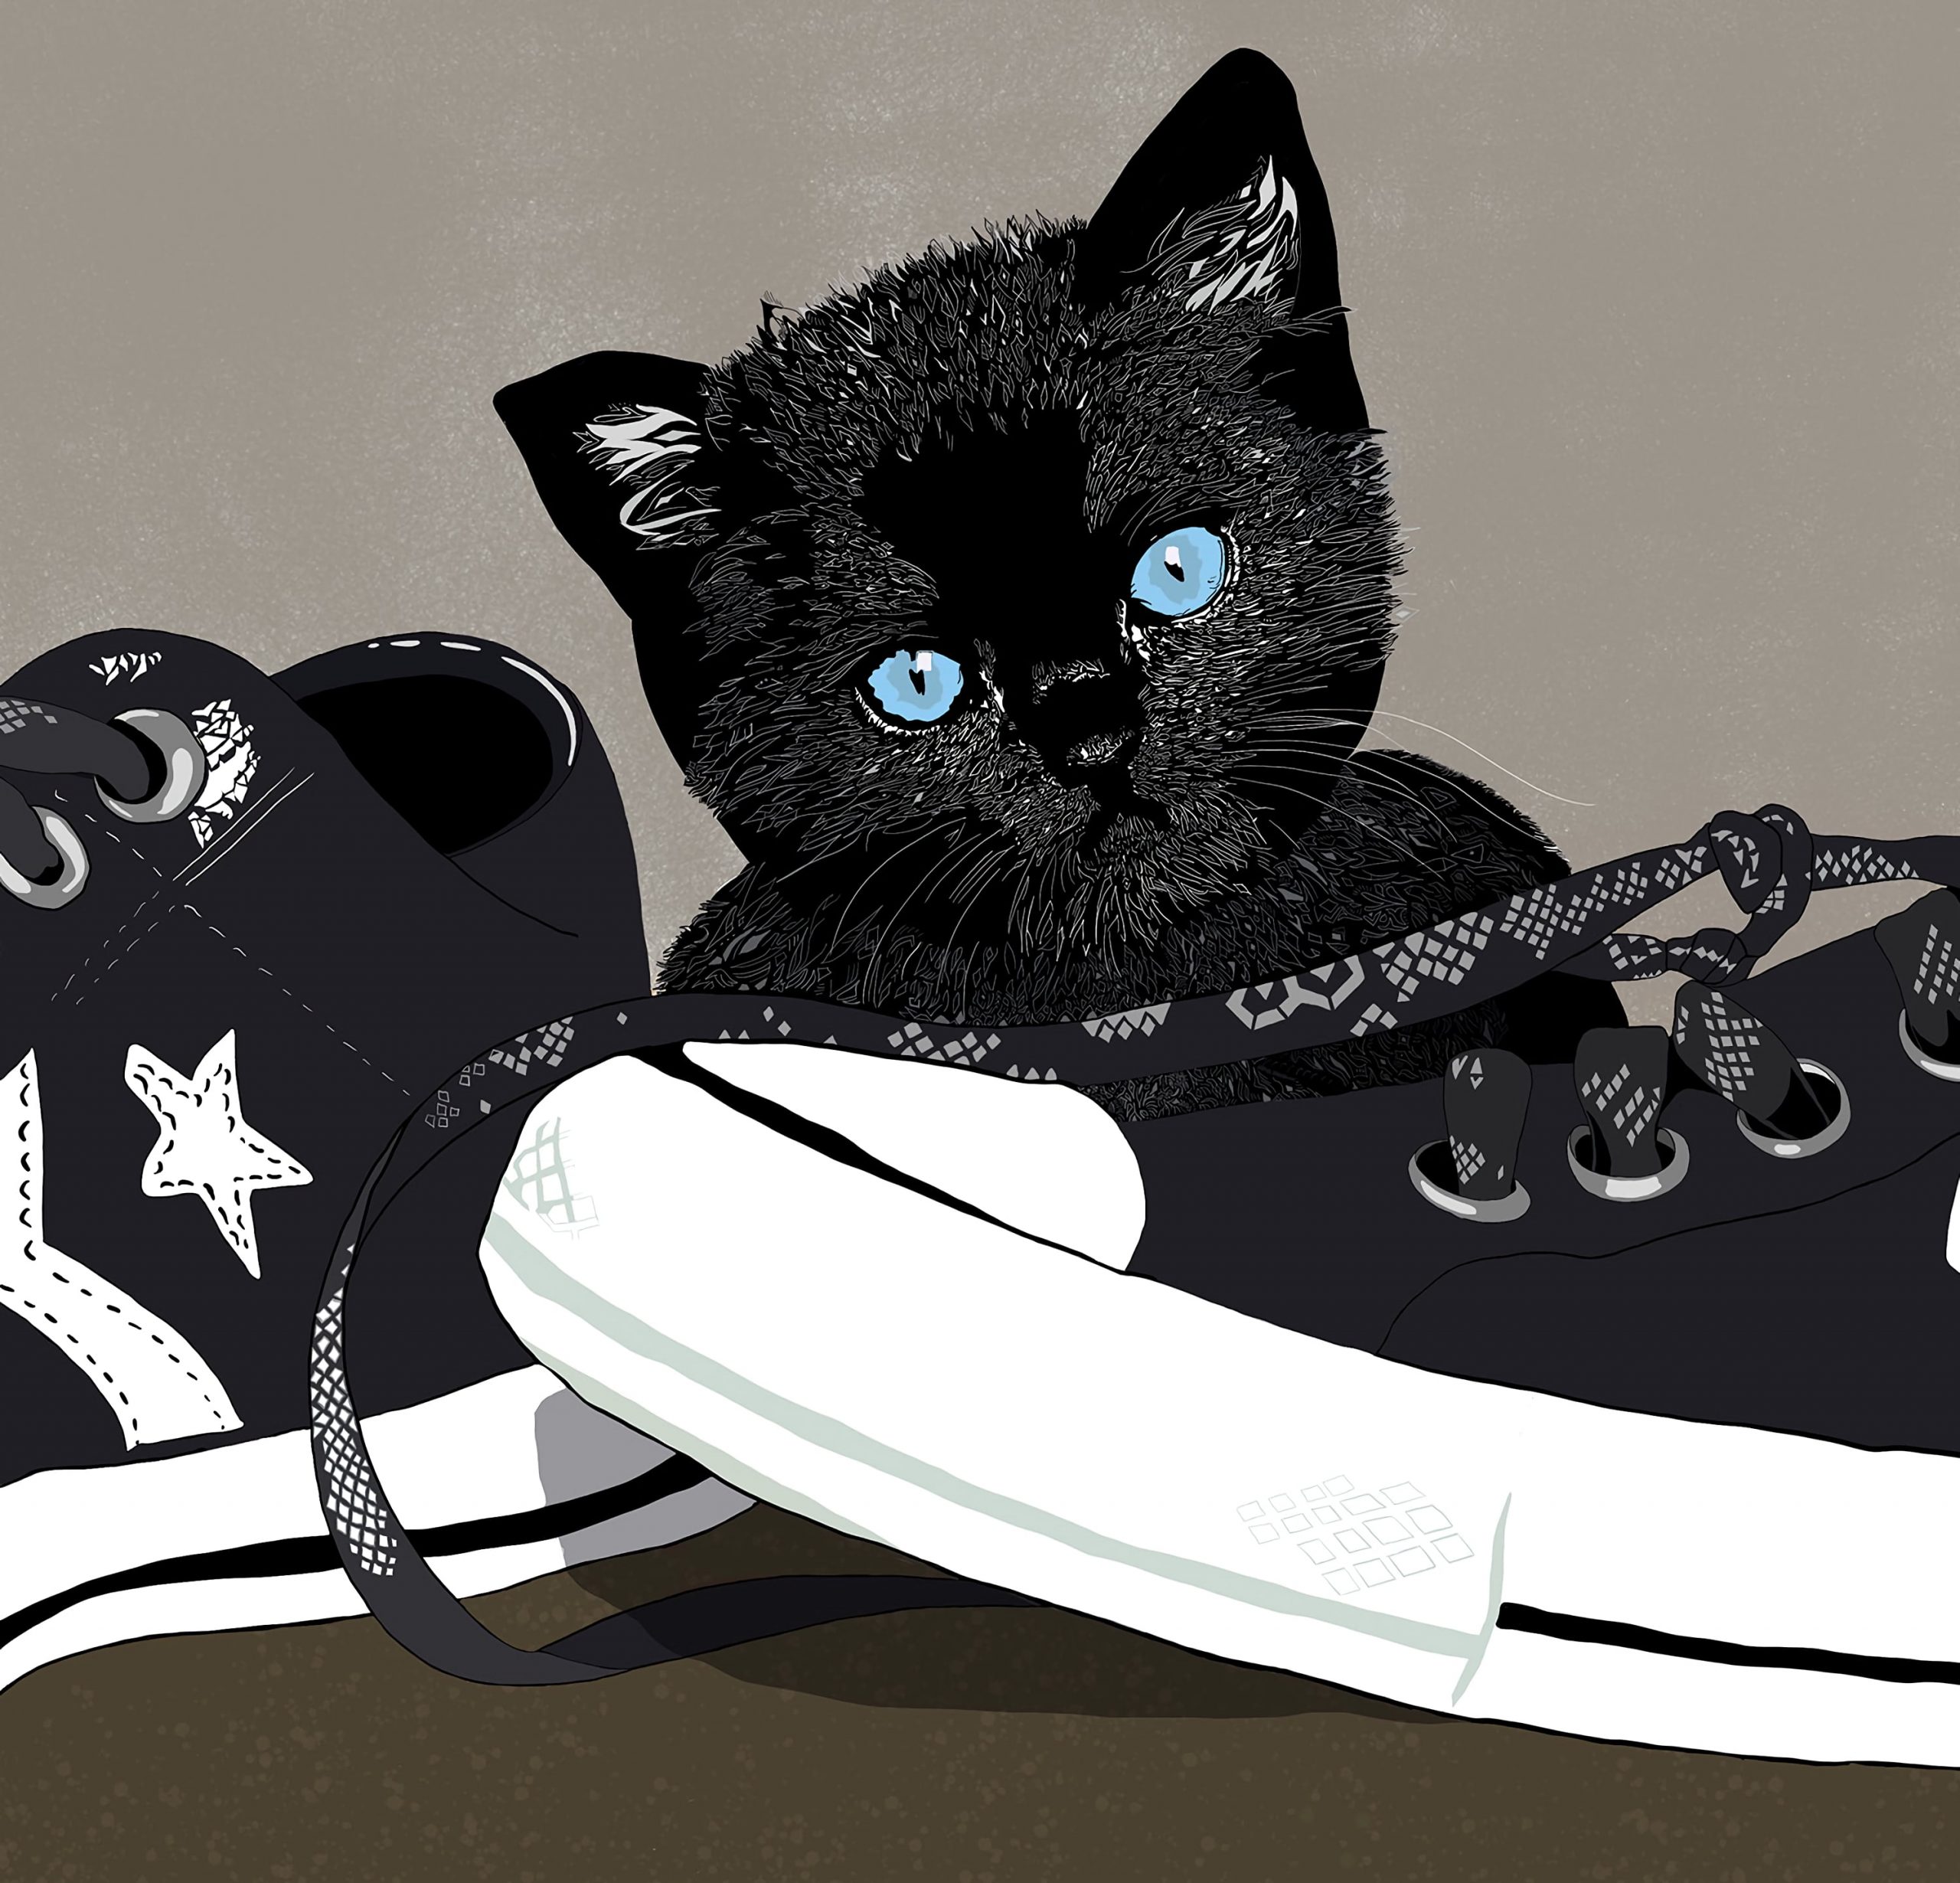 Kitten, sneakers, art, illustration, cute, cat, domestic cat